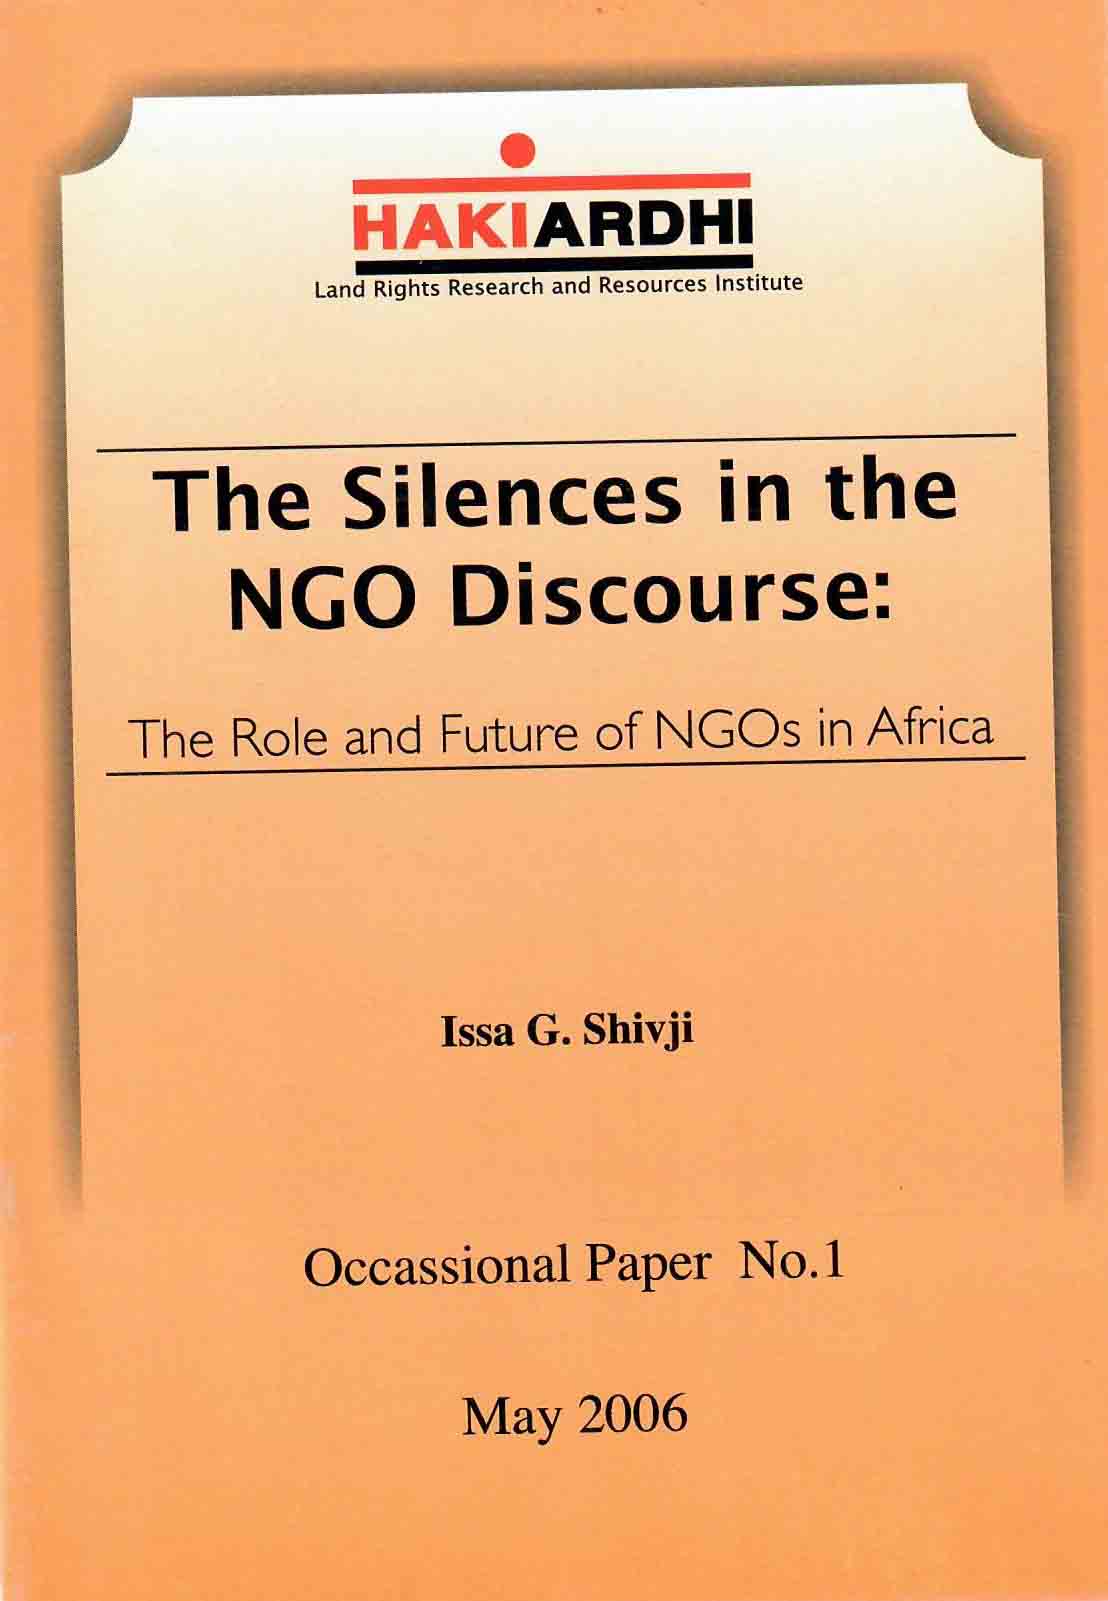 The silences in the NGO discourse